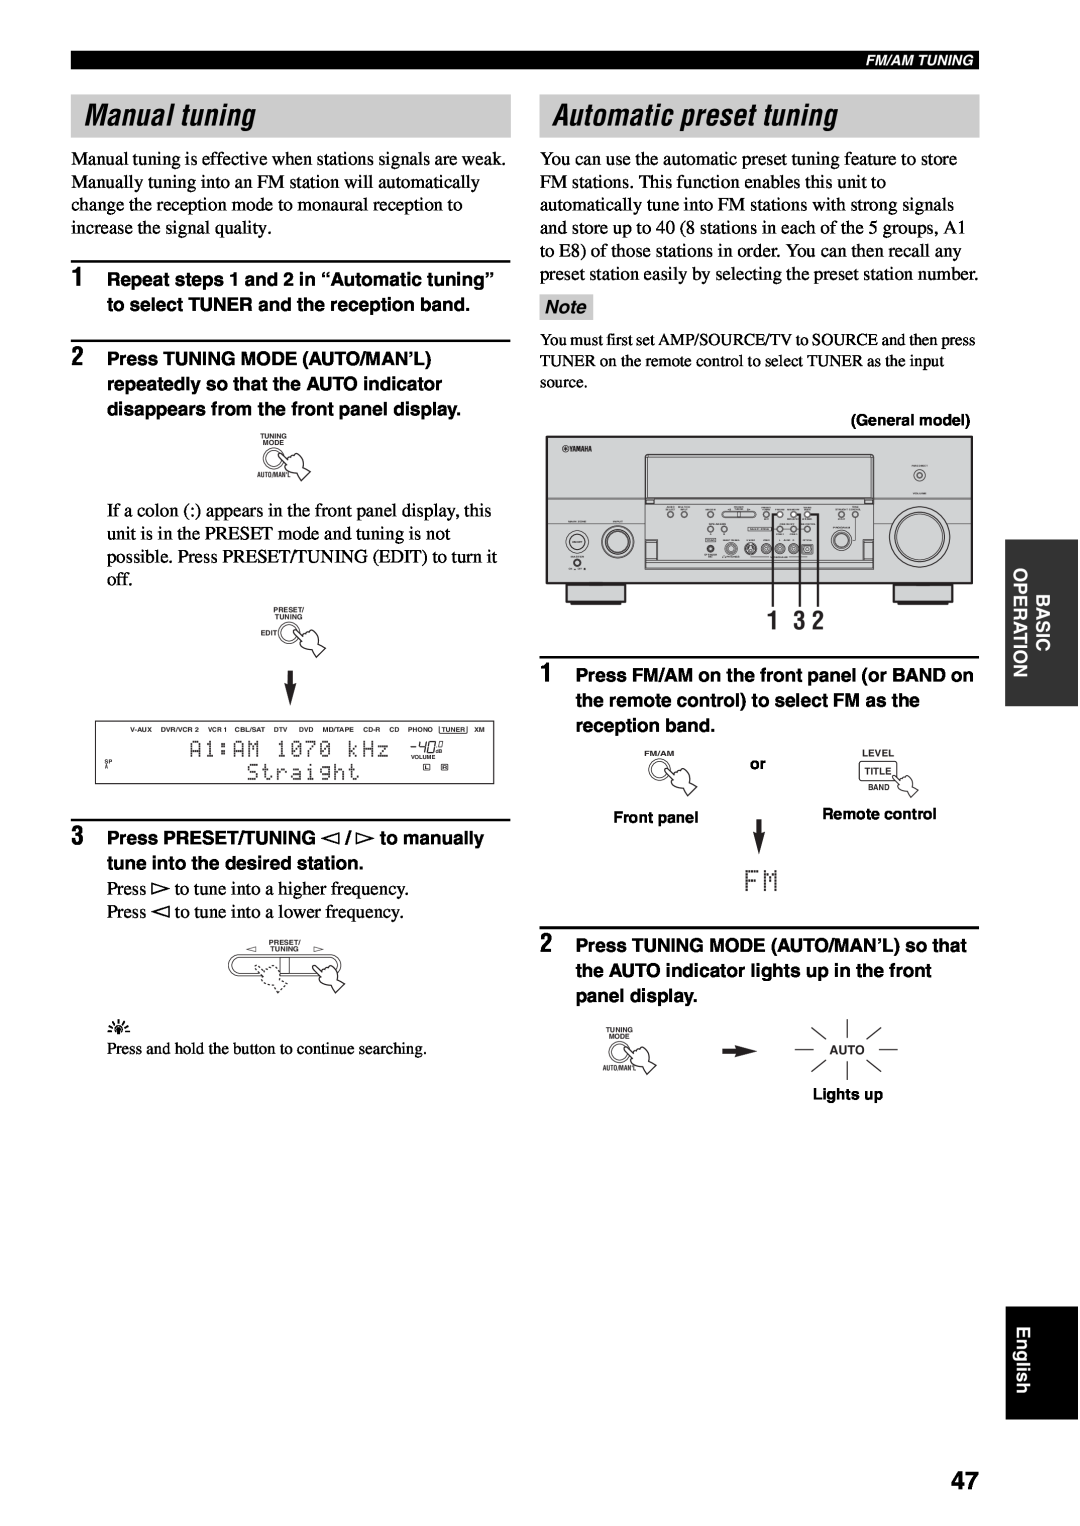 Yamaha RX-V1600 owner manual Manual tuning, Automatic preset tuning, A1:AM 1070 kHz, Straight 